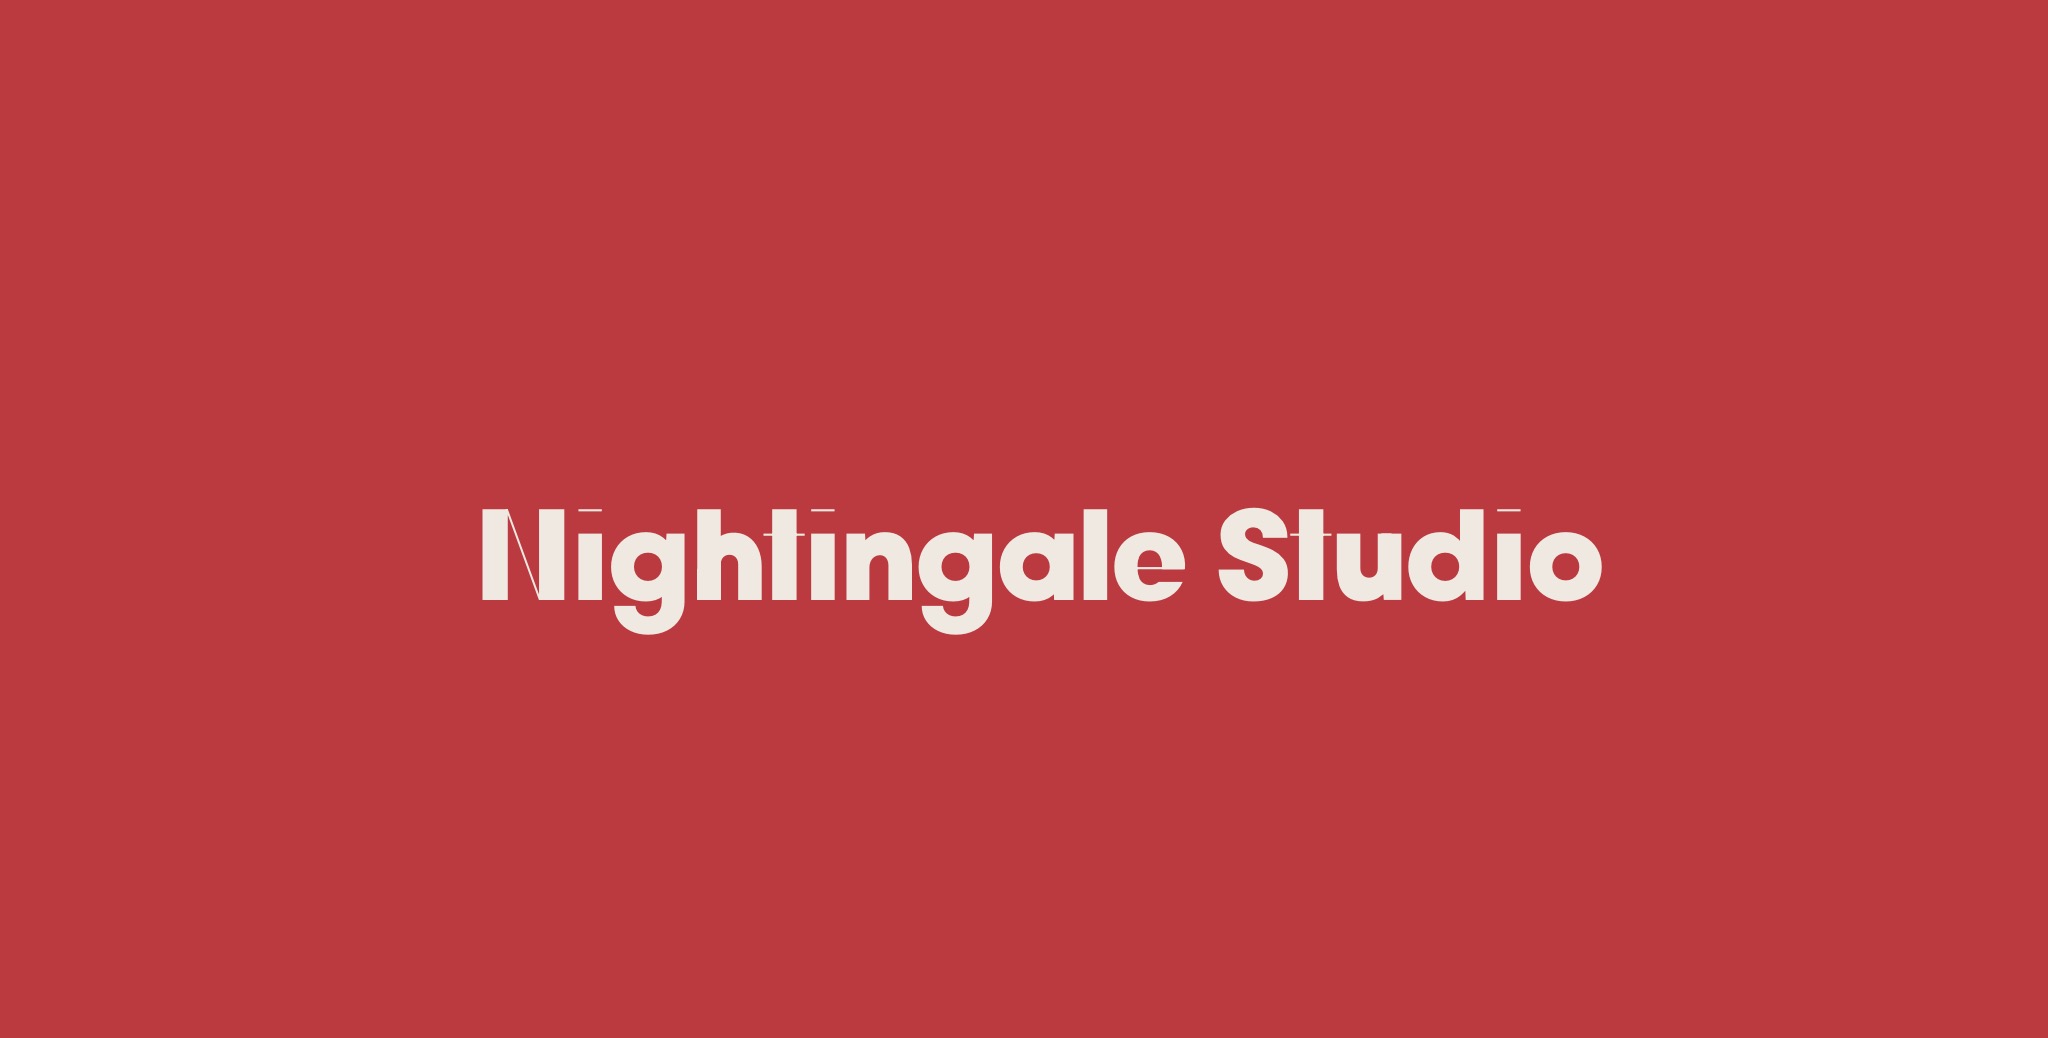 Nightingale Studio